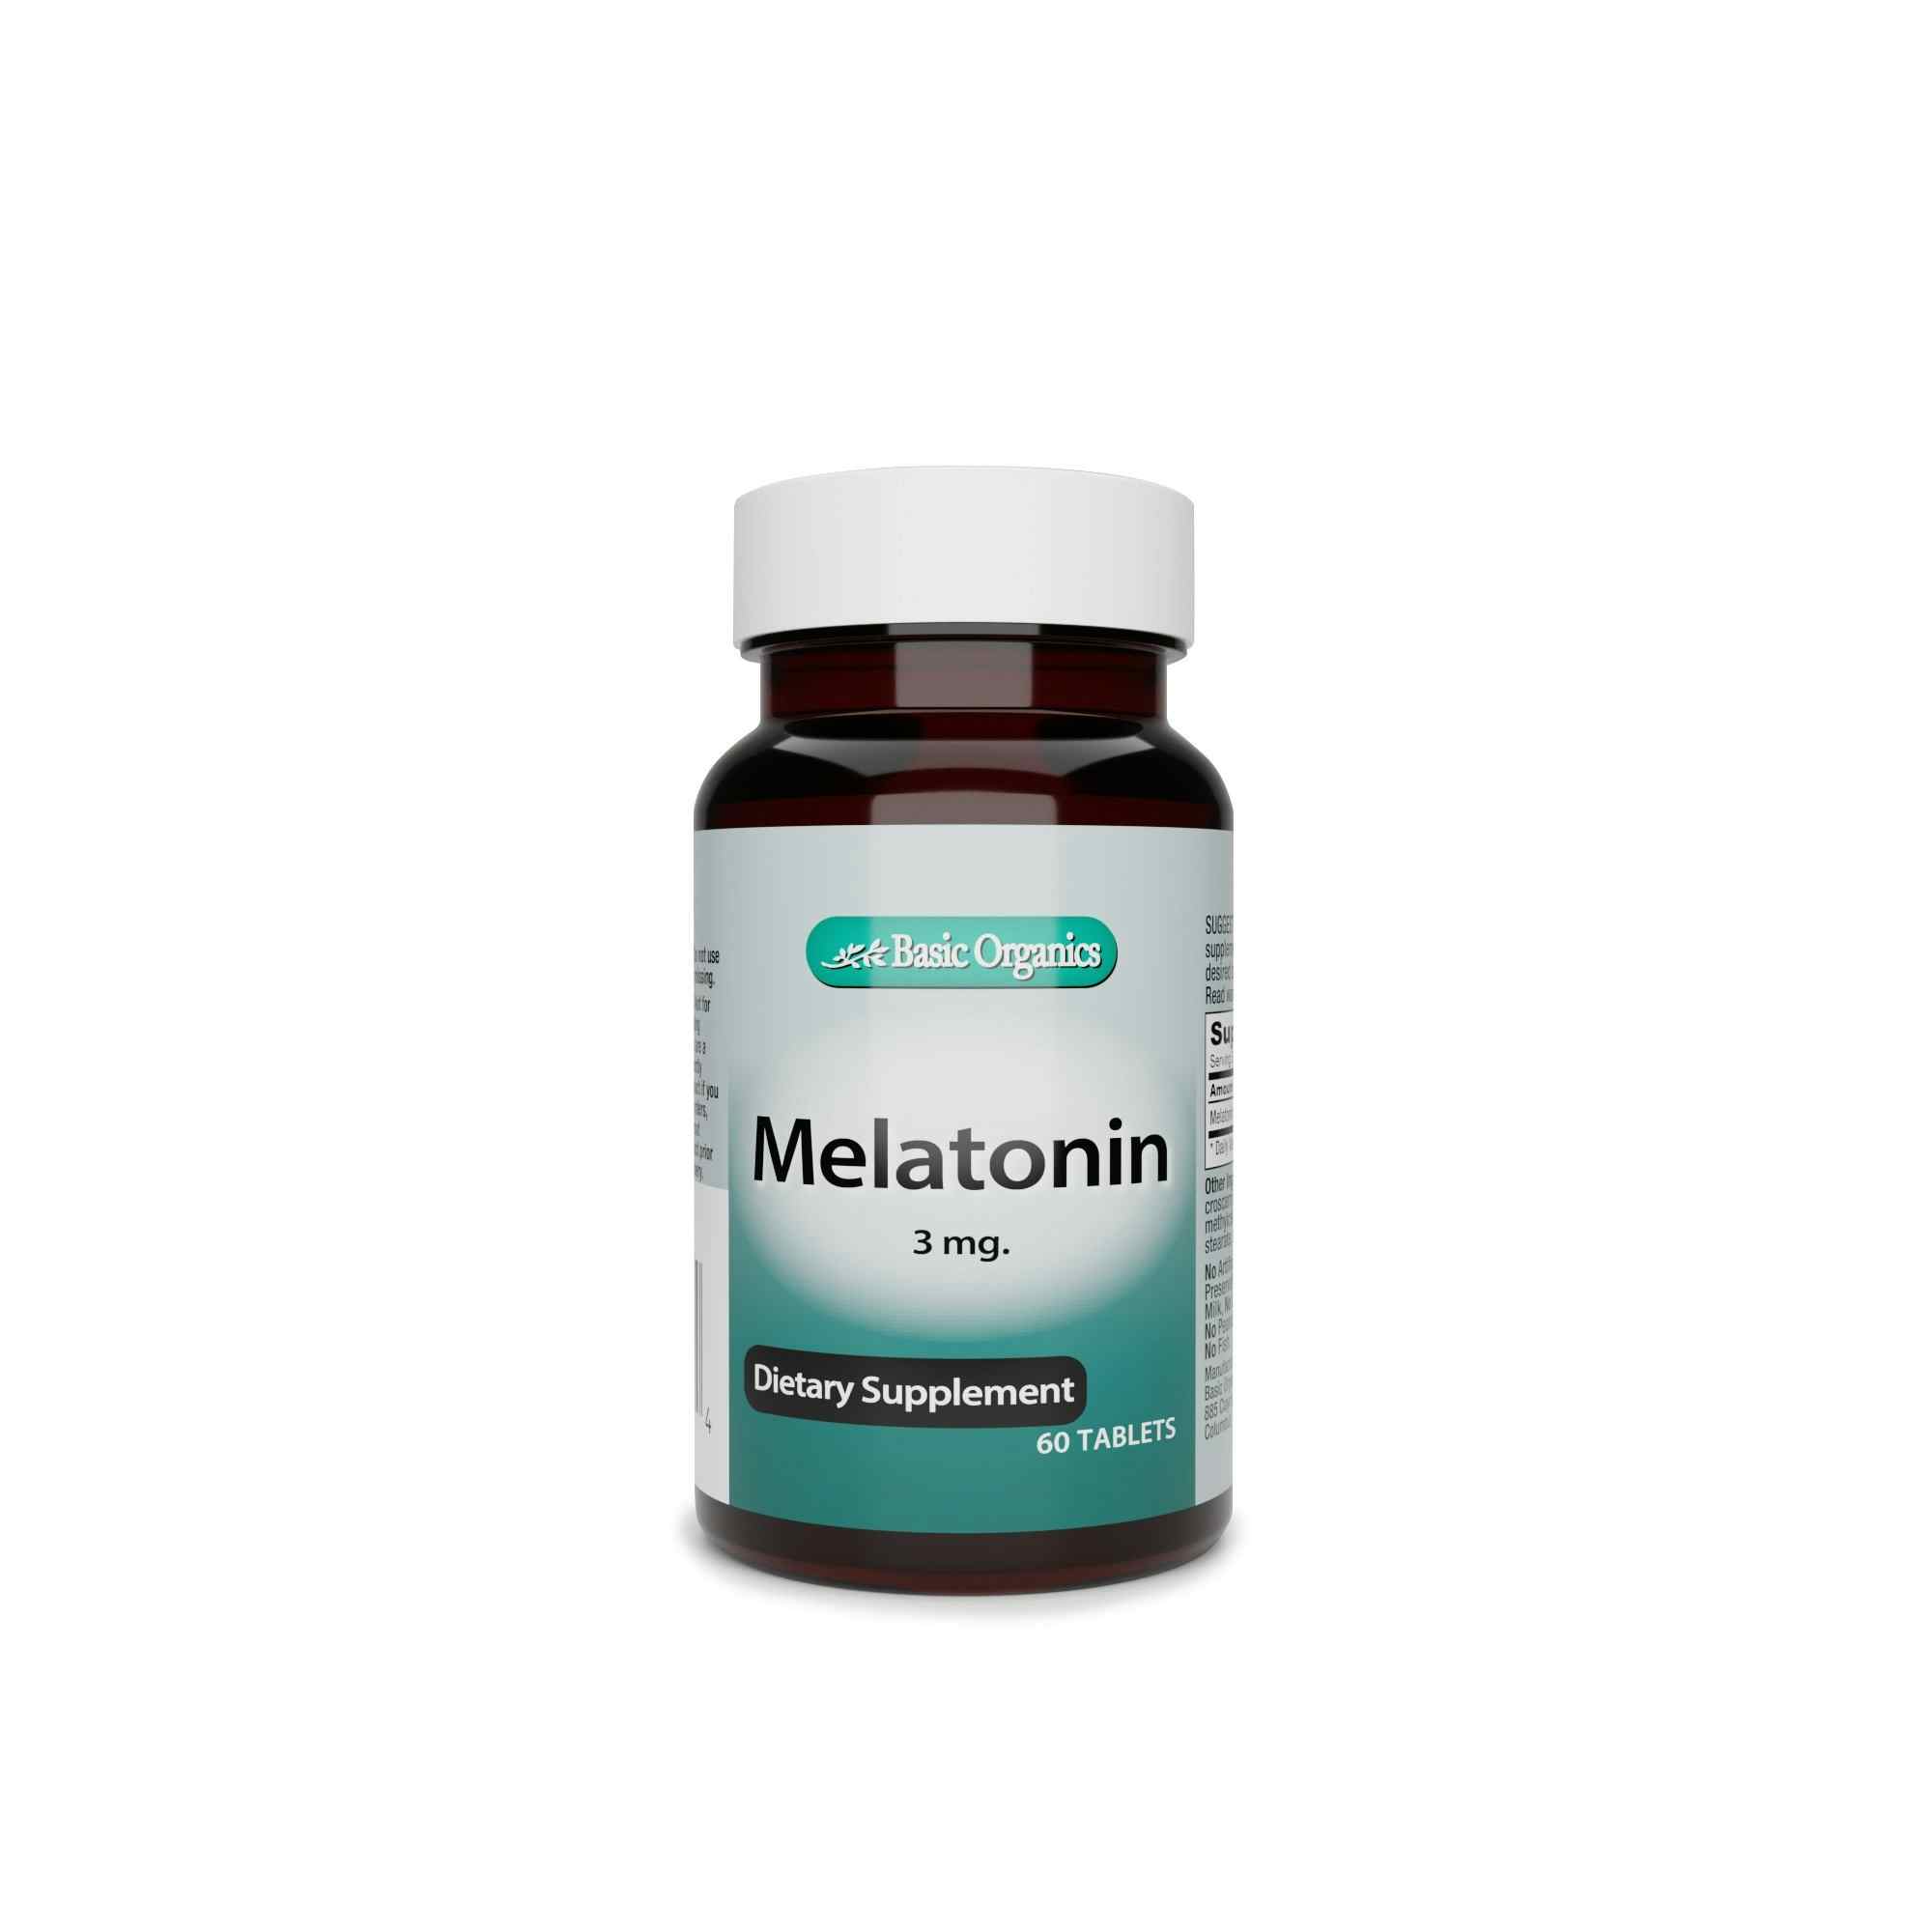 Basic Organics Melatonin, 3 mg., 60 Tablets, 05445821360, 1 Bottle